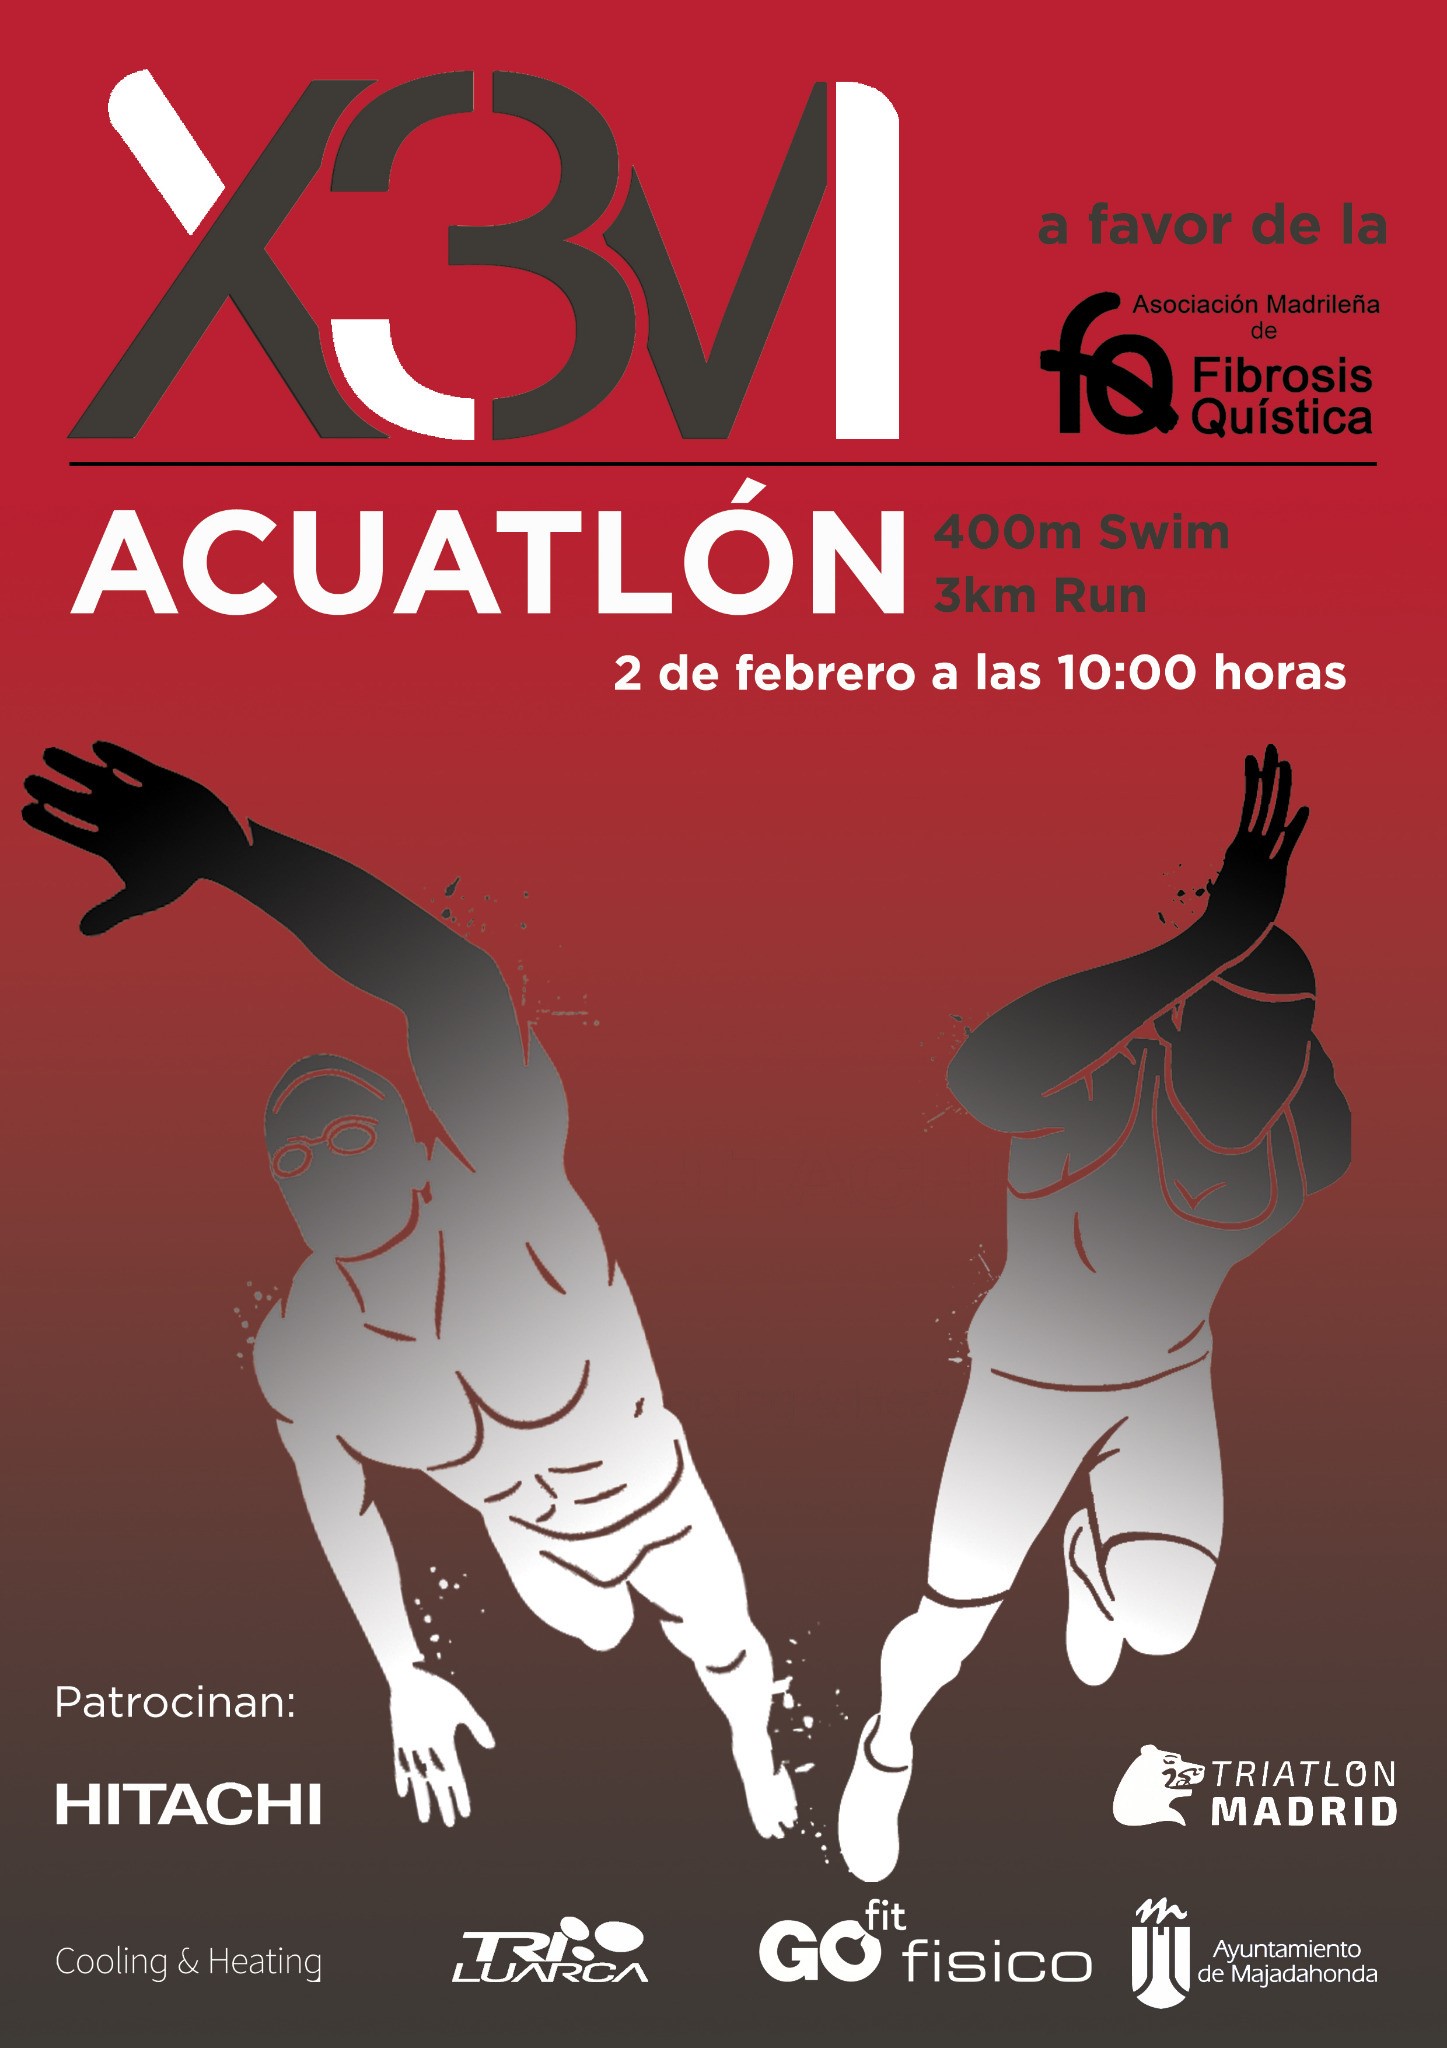 federacion española fibrosis quistica se prepara la iii edicion del acuatlon x3m triatlon a favor de la asociacion madrilena de fq